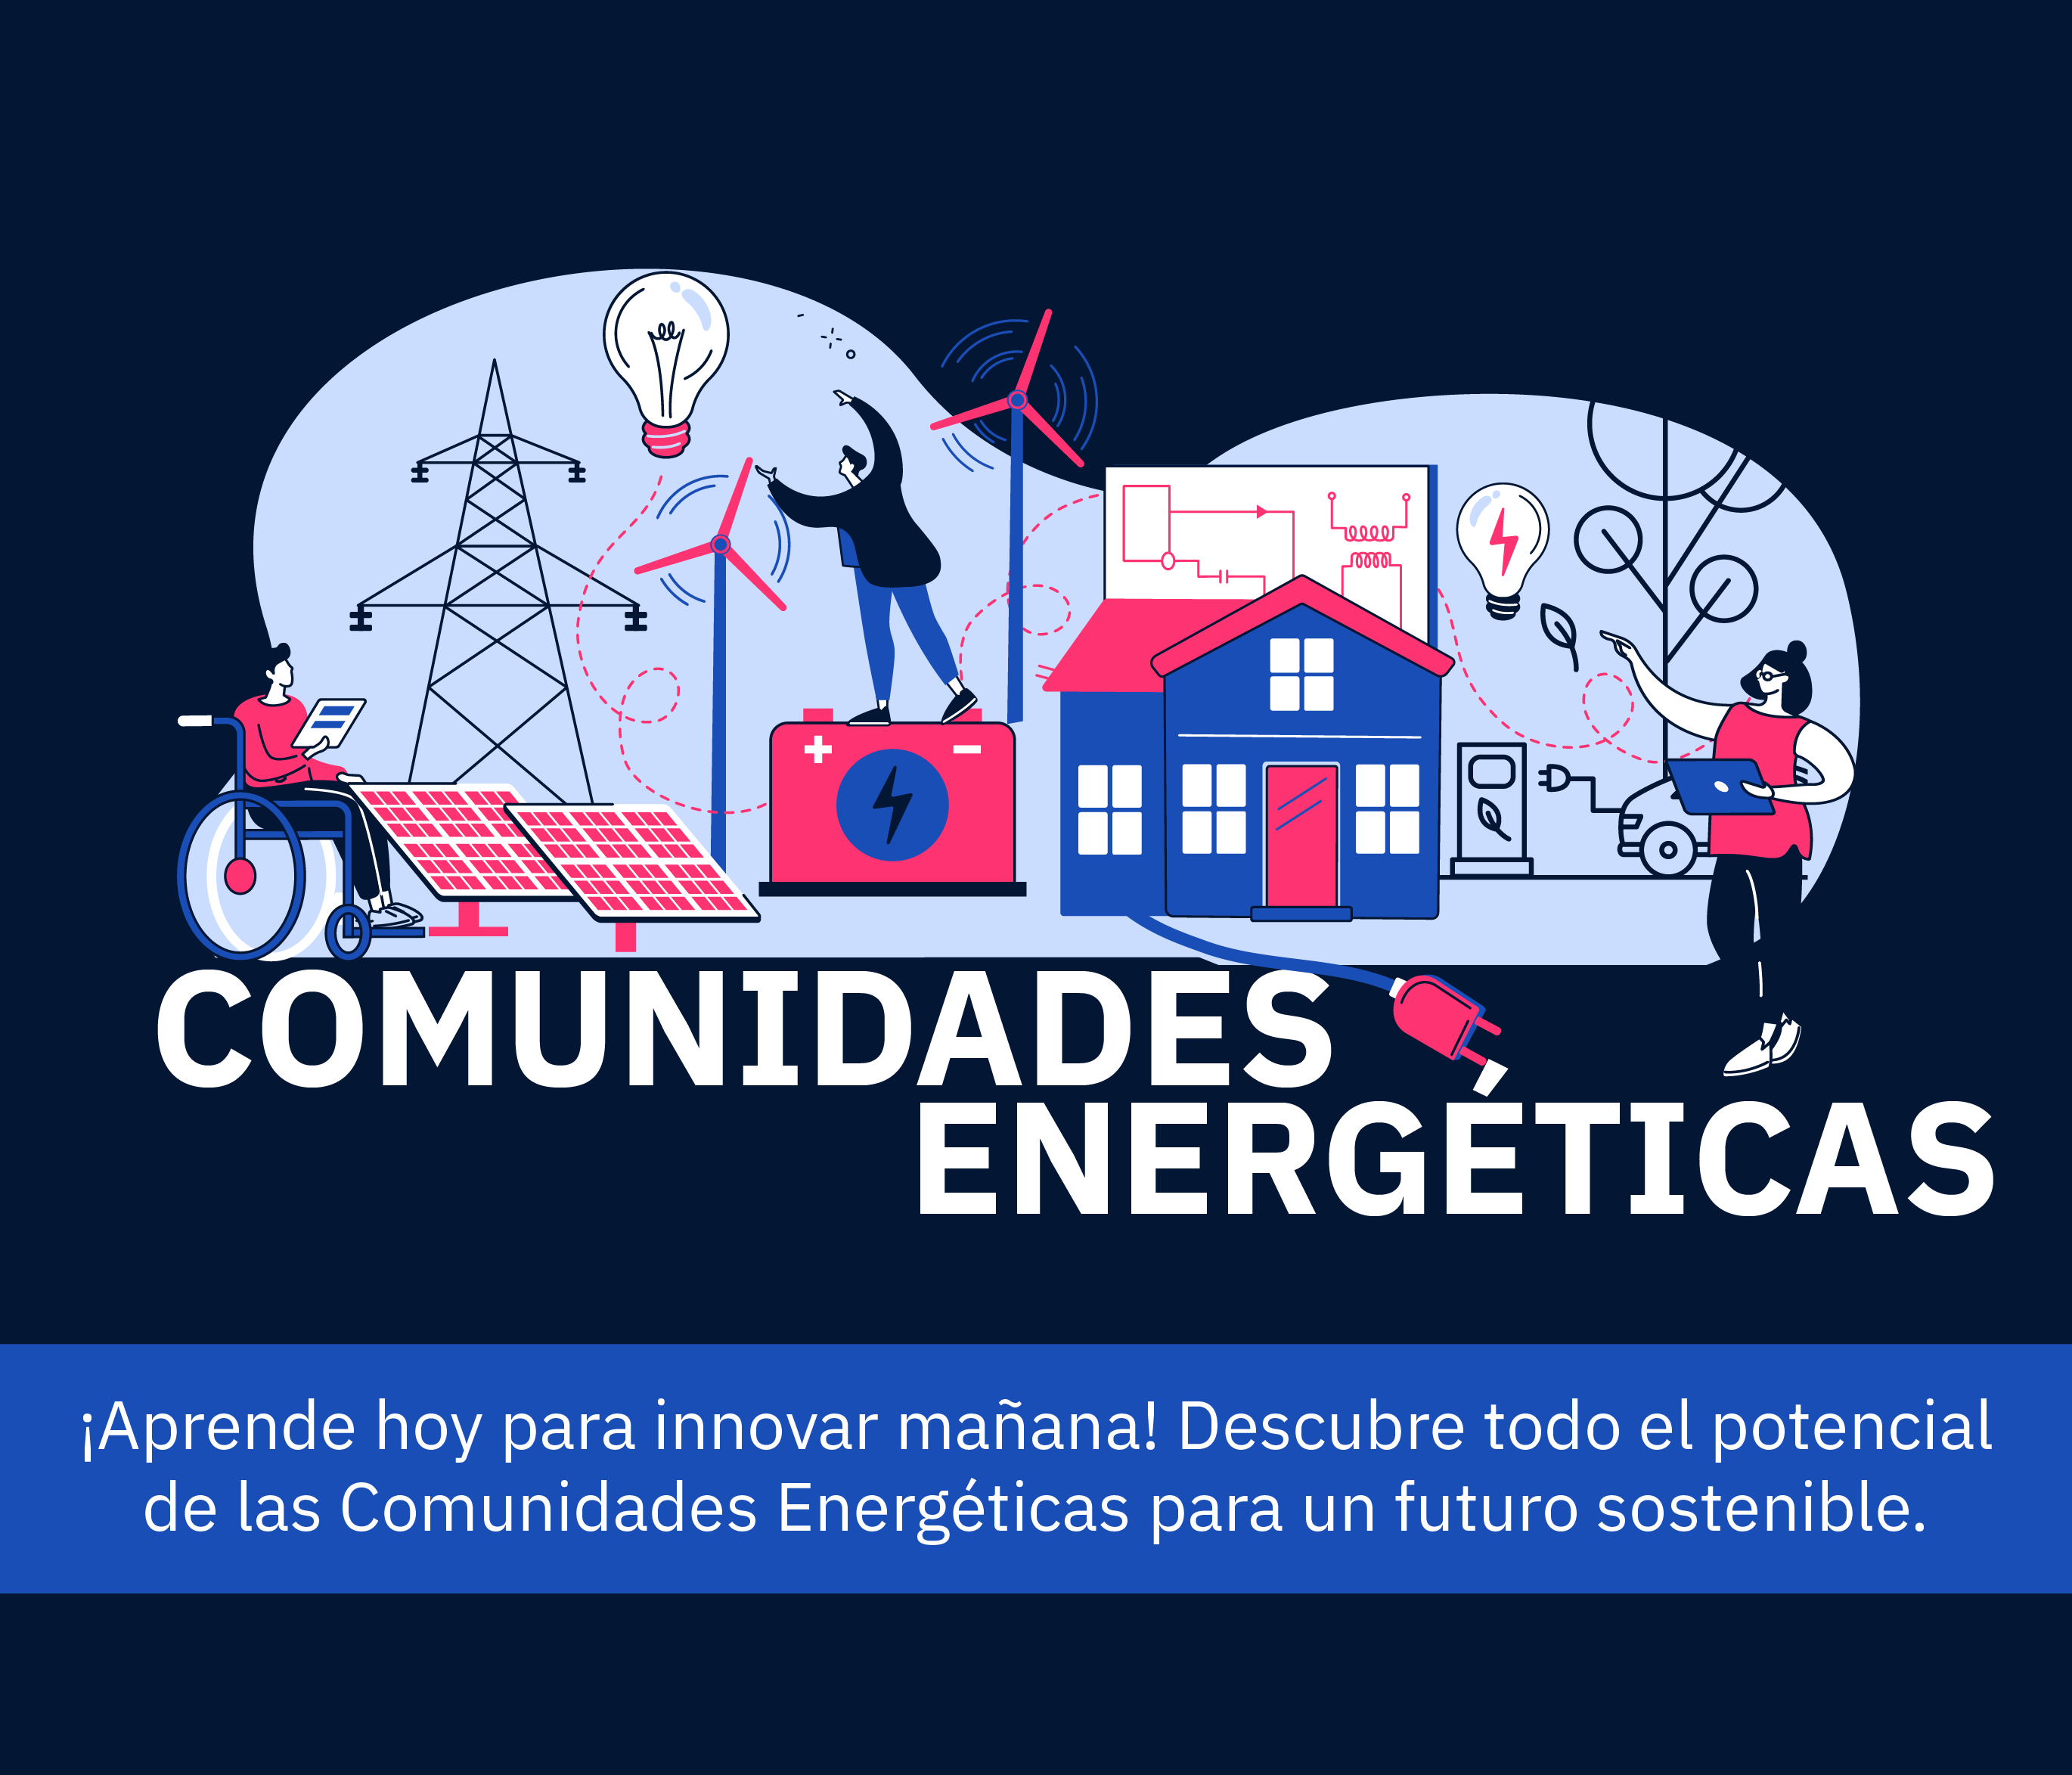 Training in Energy Communities 